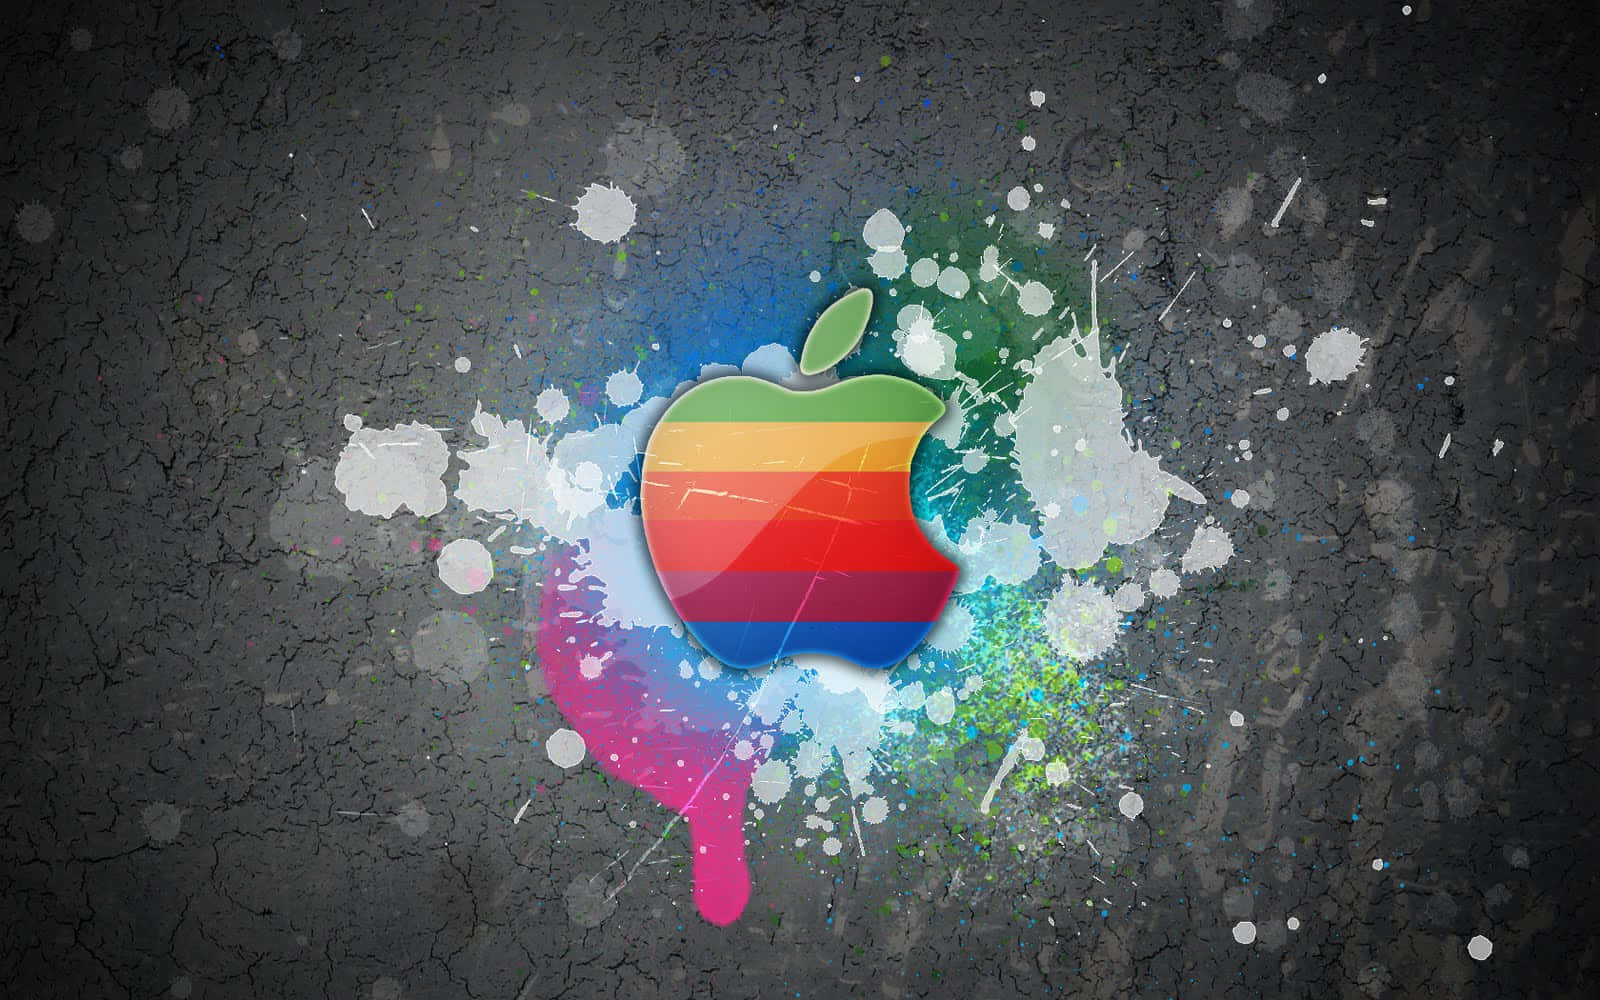 Apple Logo On A Black Background Wallpaper